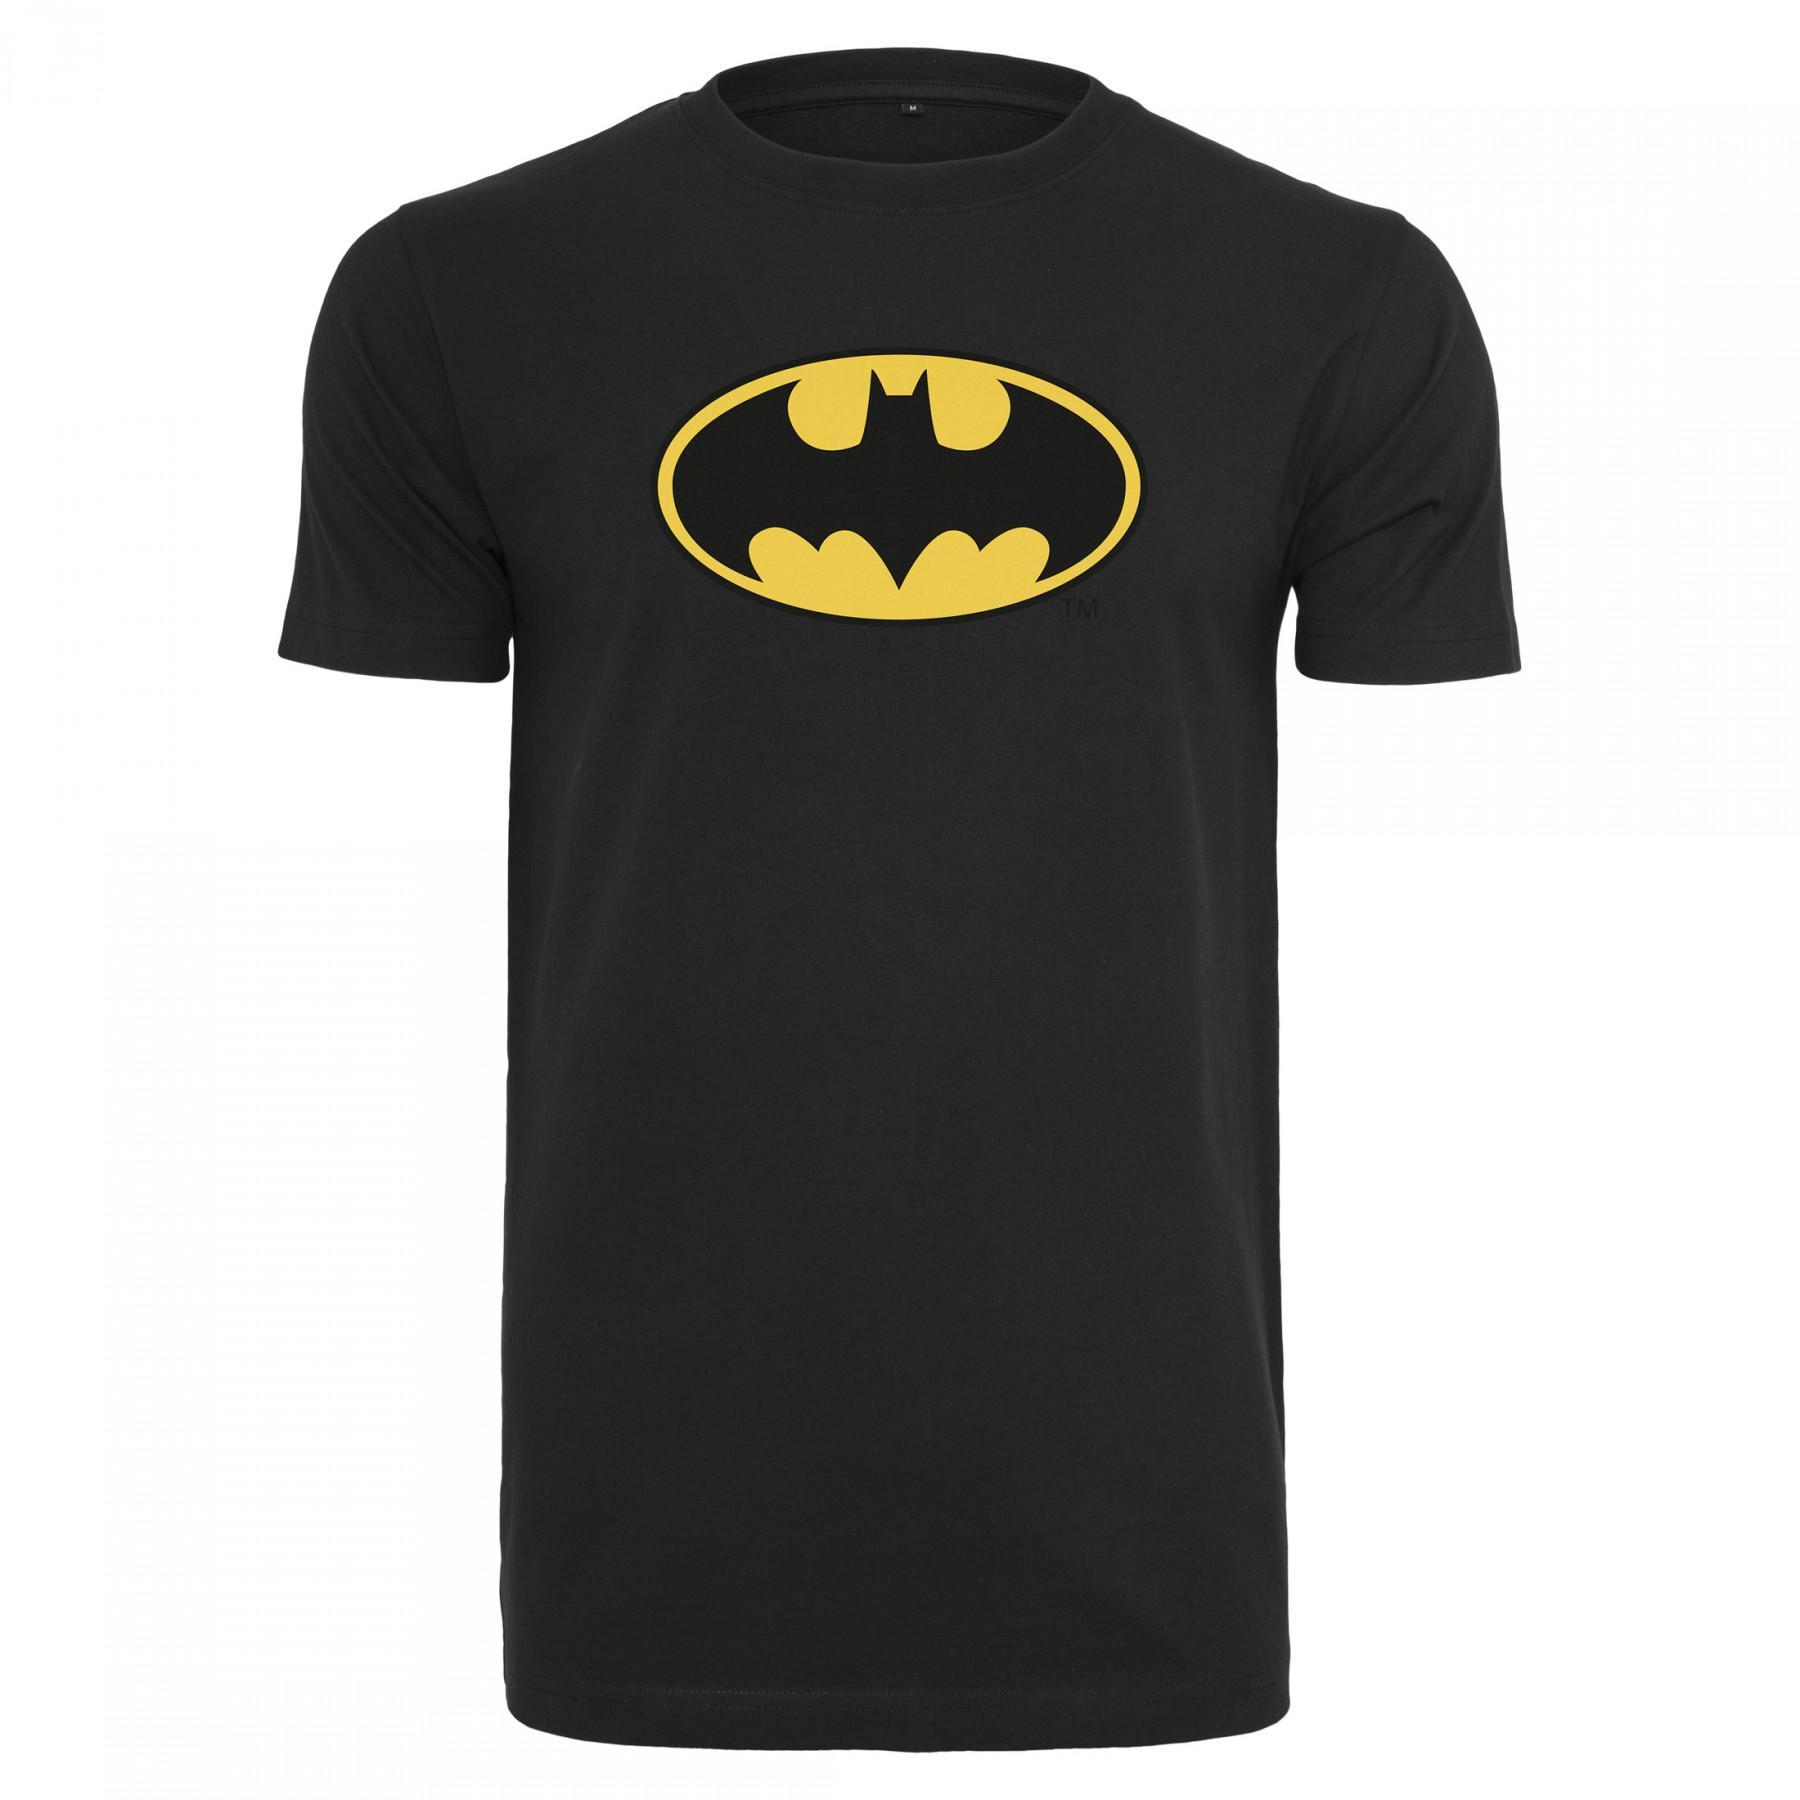 Koszulka Urban Classic batman logo gt